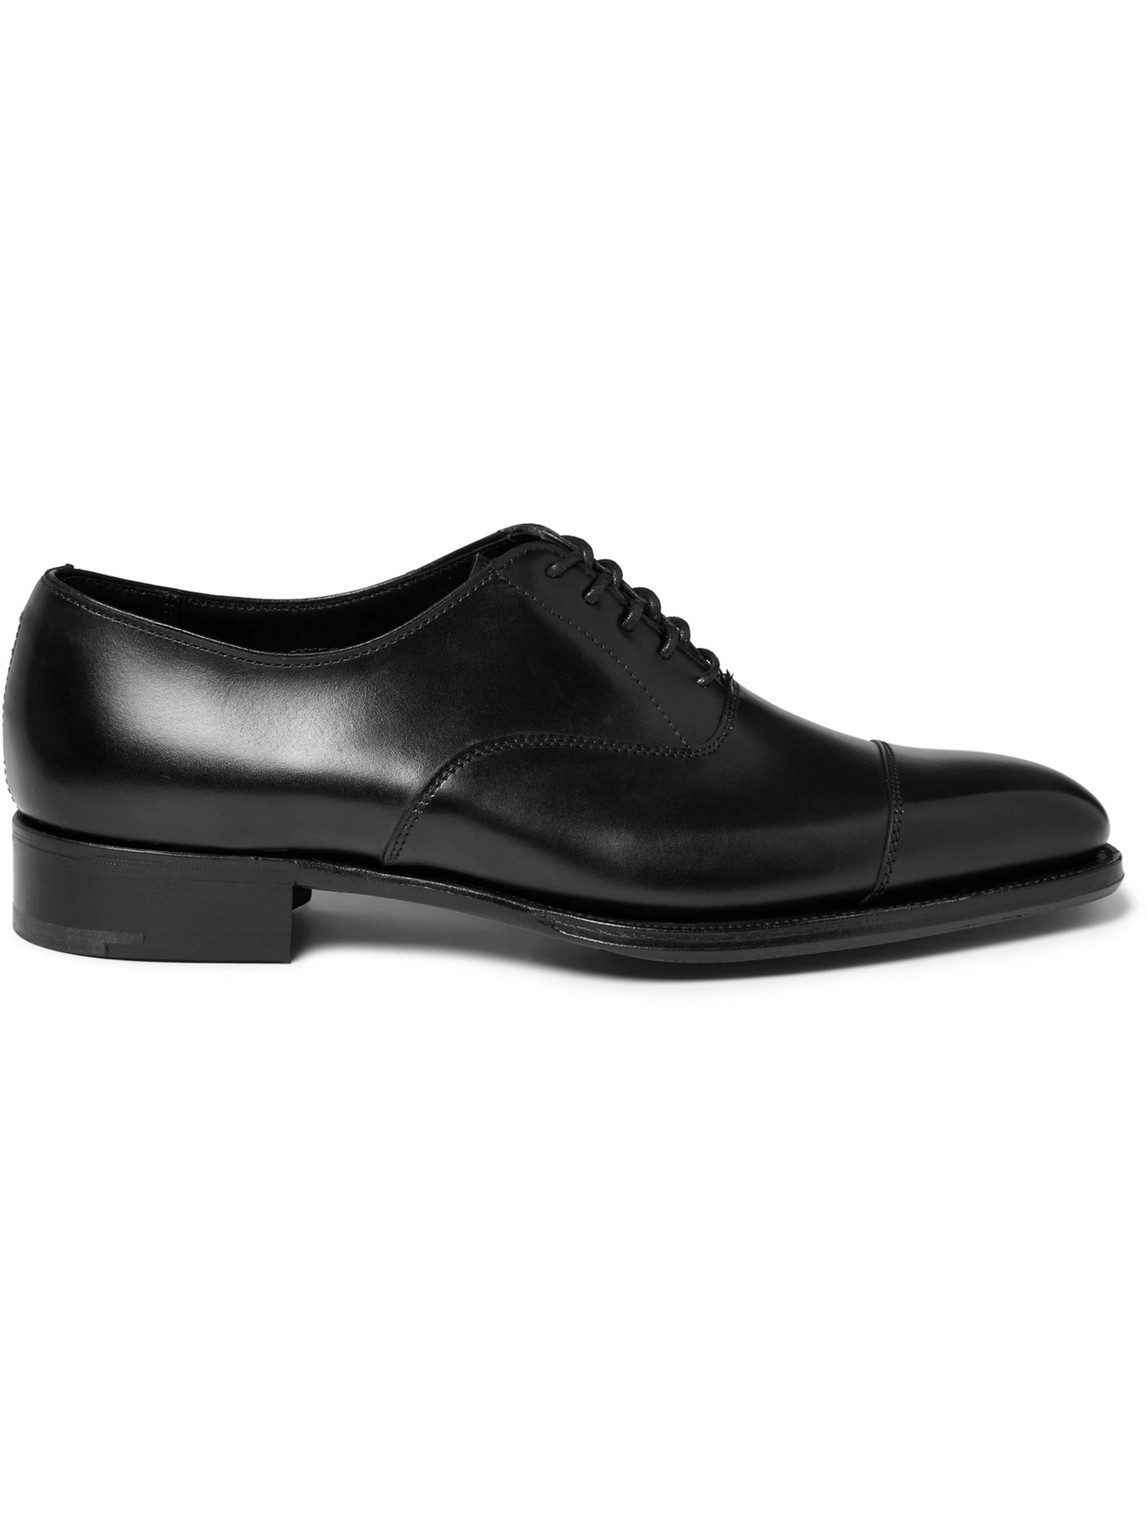 Kingsman - George Cleverley Leather Oxford Shoes - Men - Black - UK 11. ...